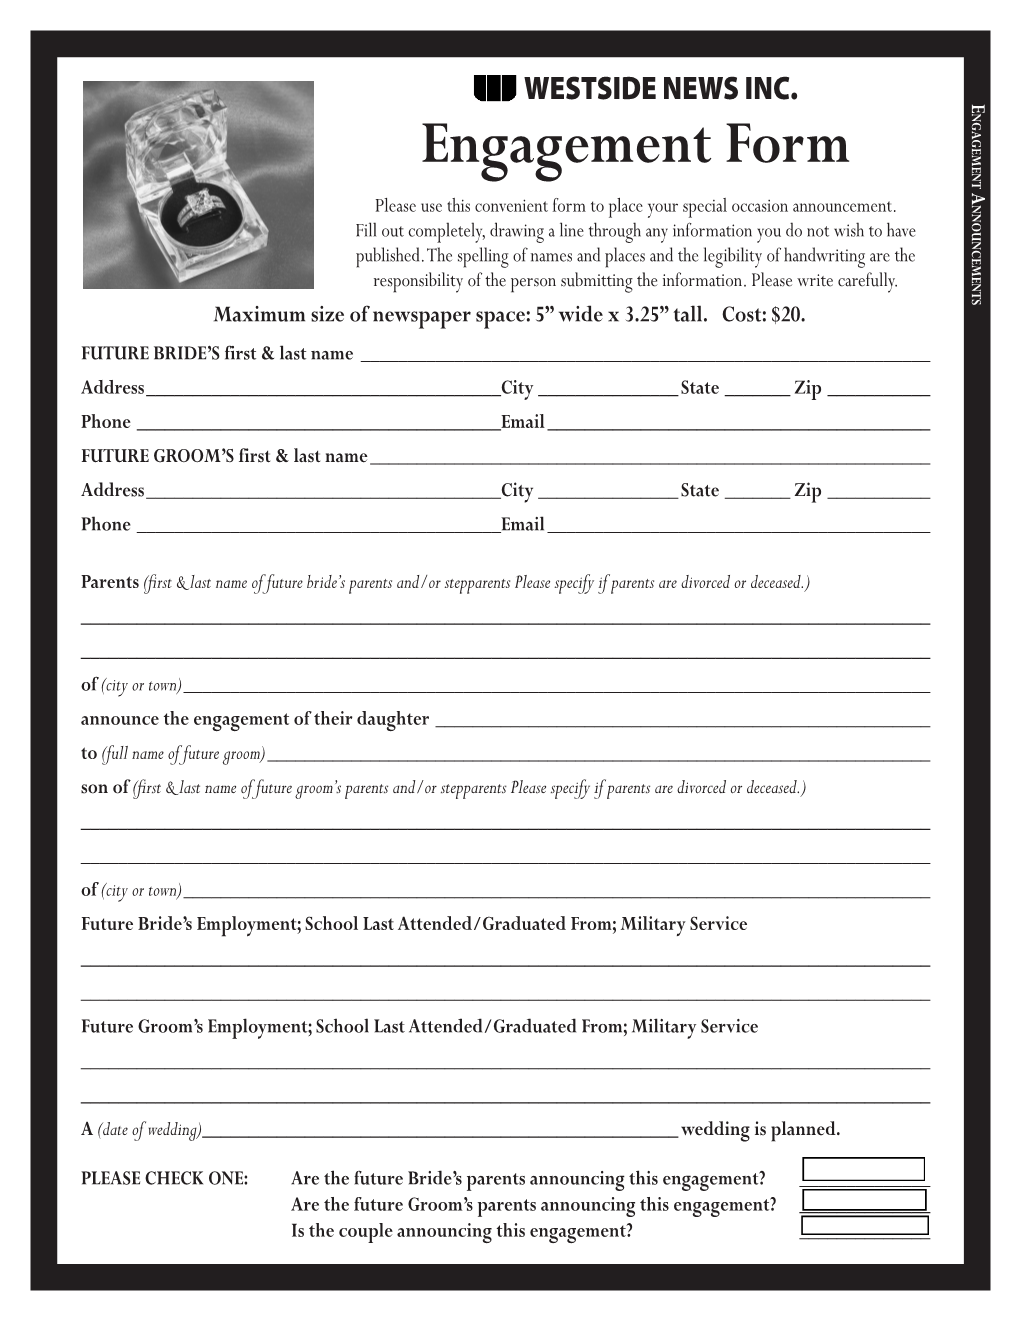 Engagement Form NT